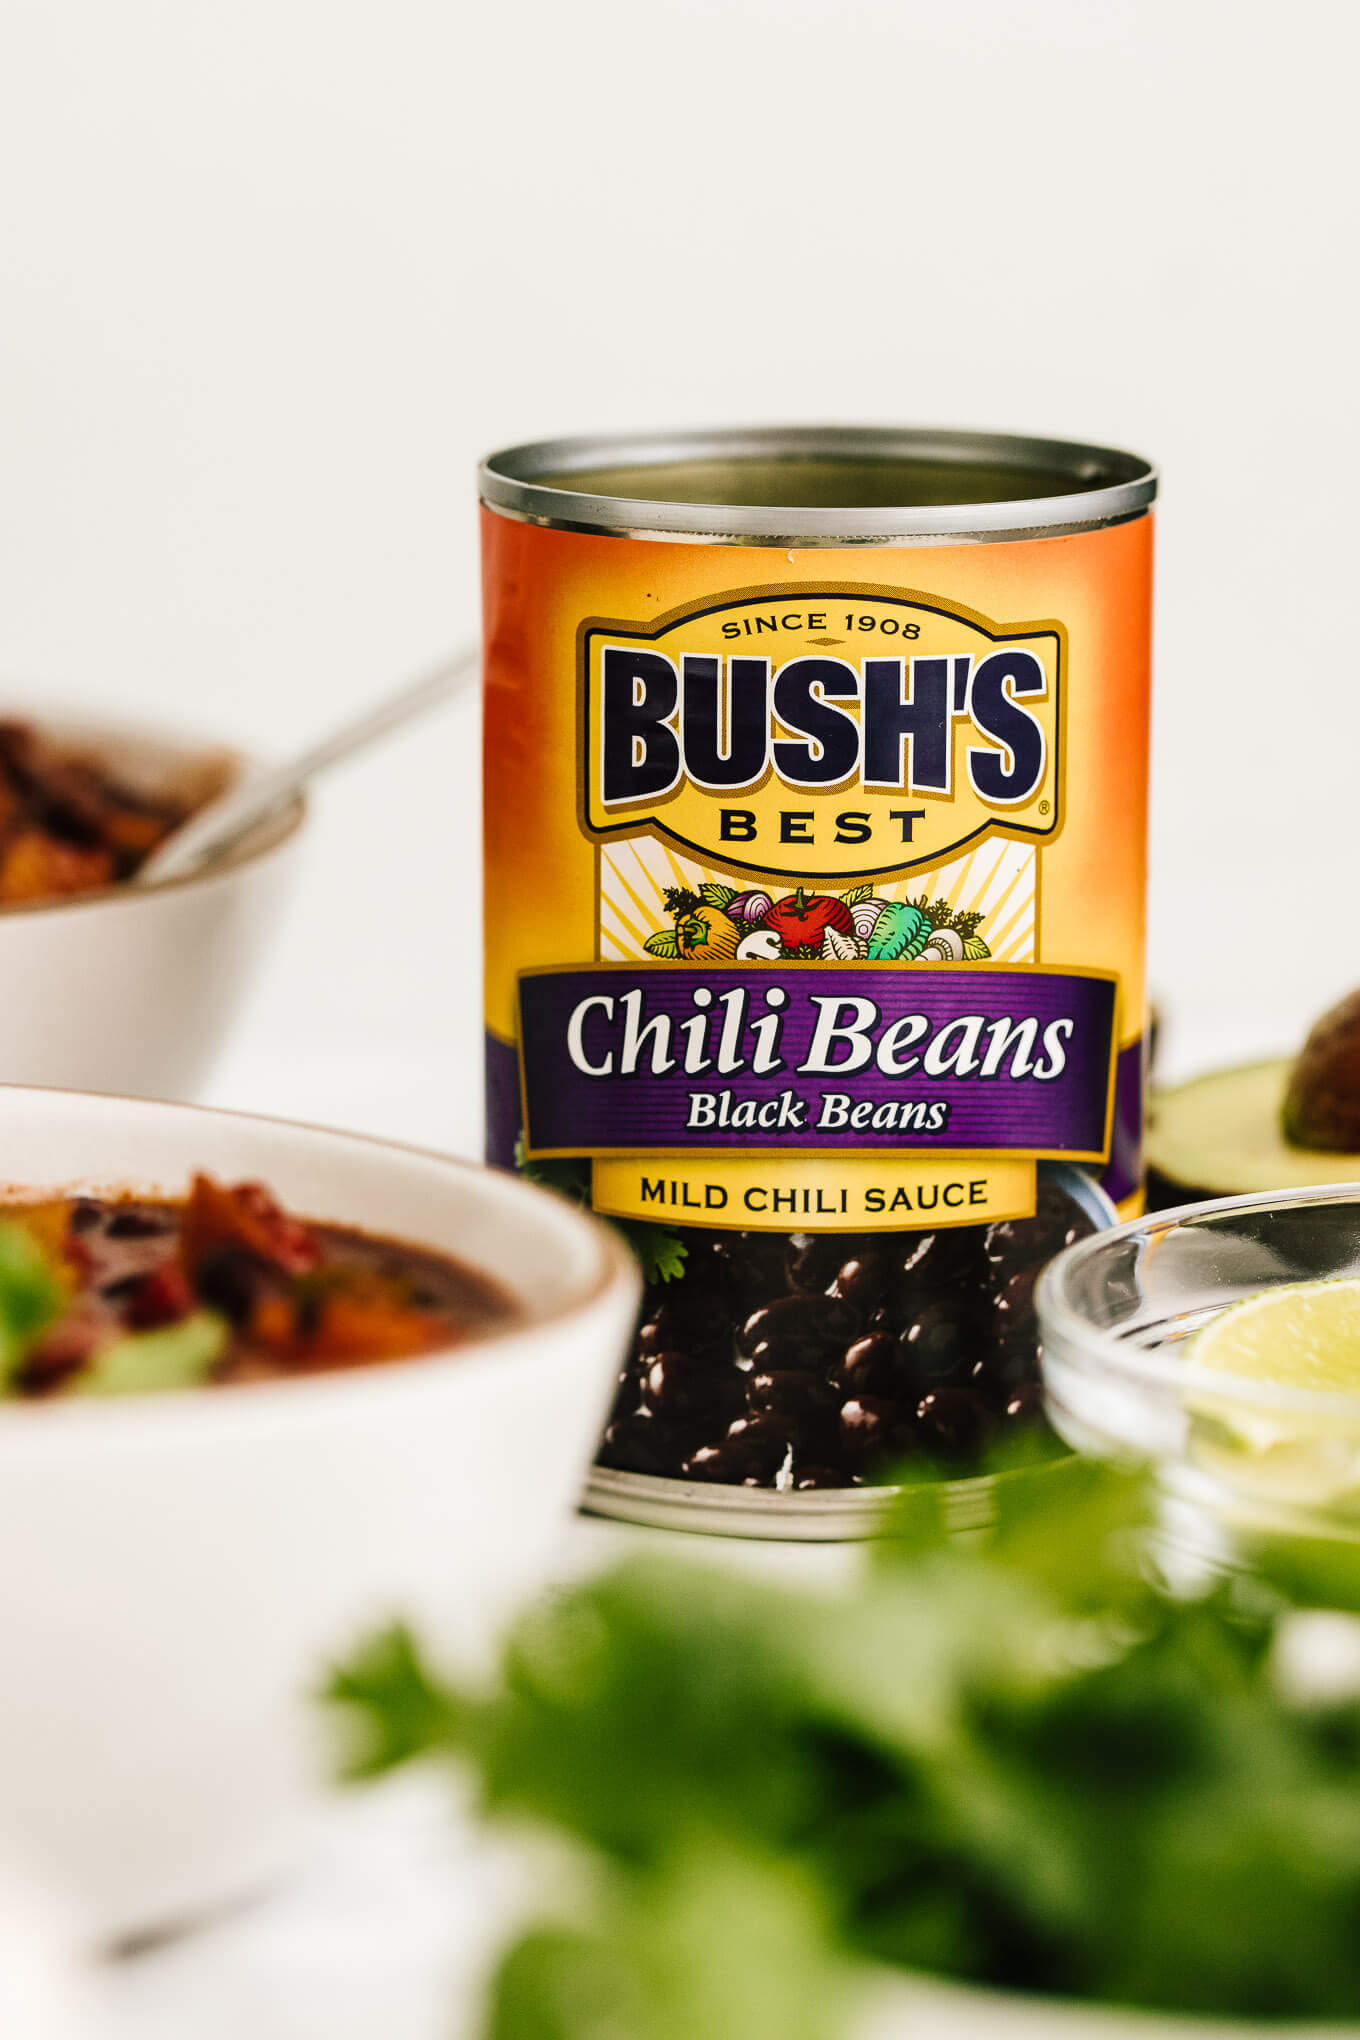 BUSH'S Black Beans in Mild Chili Sauce